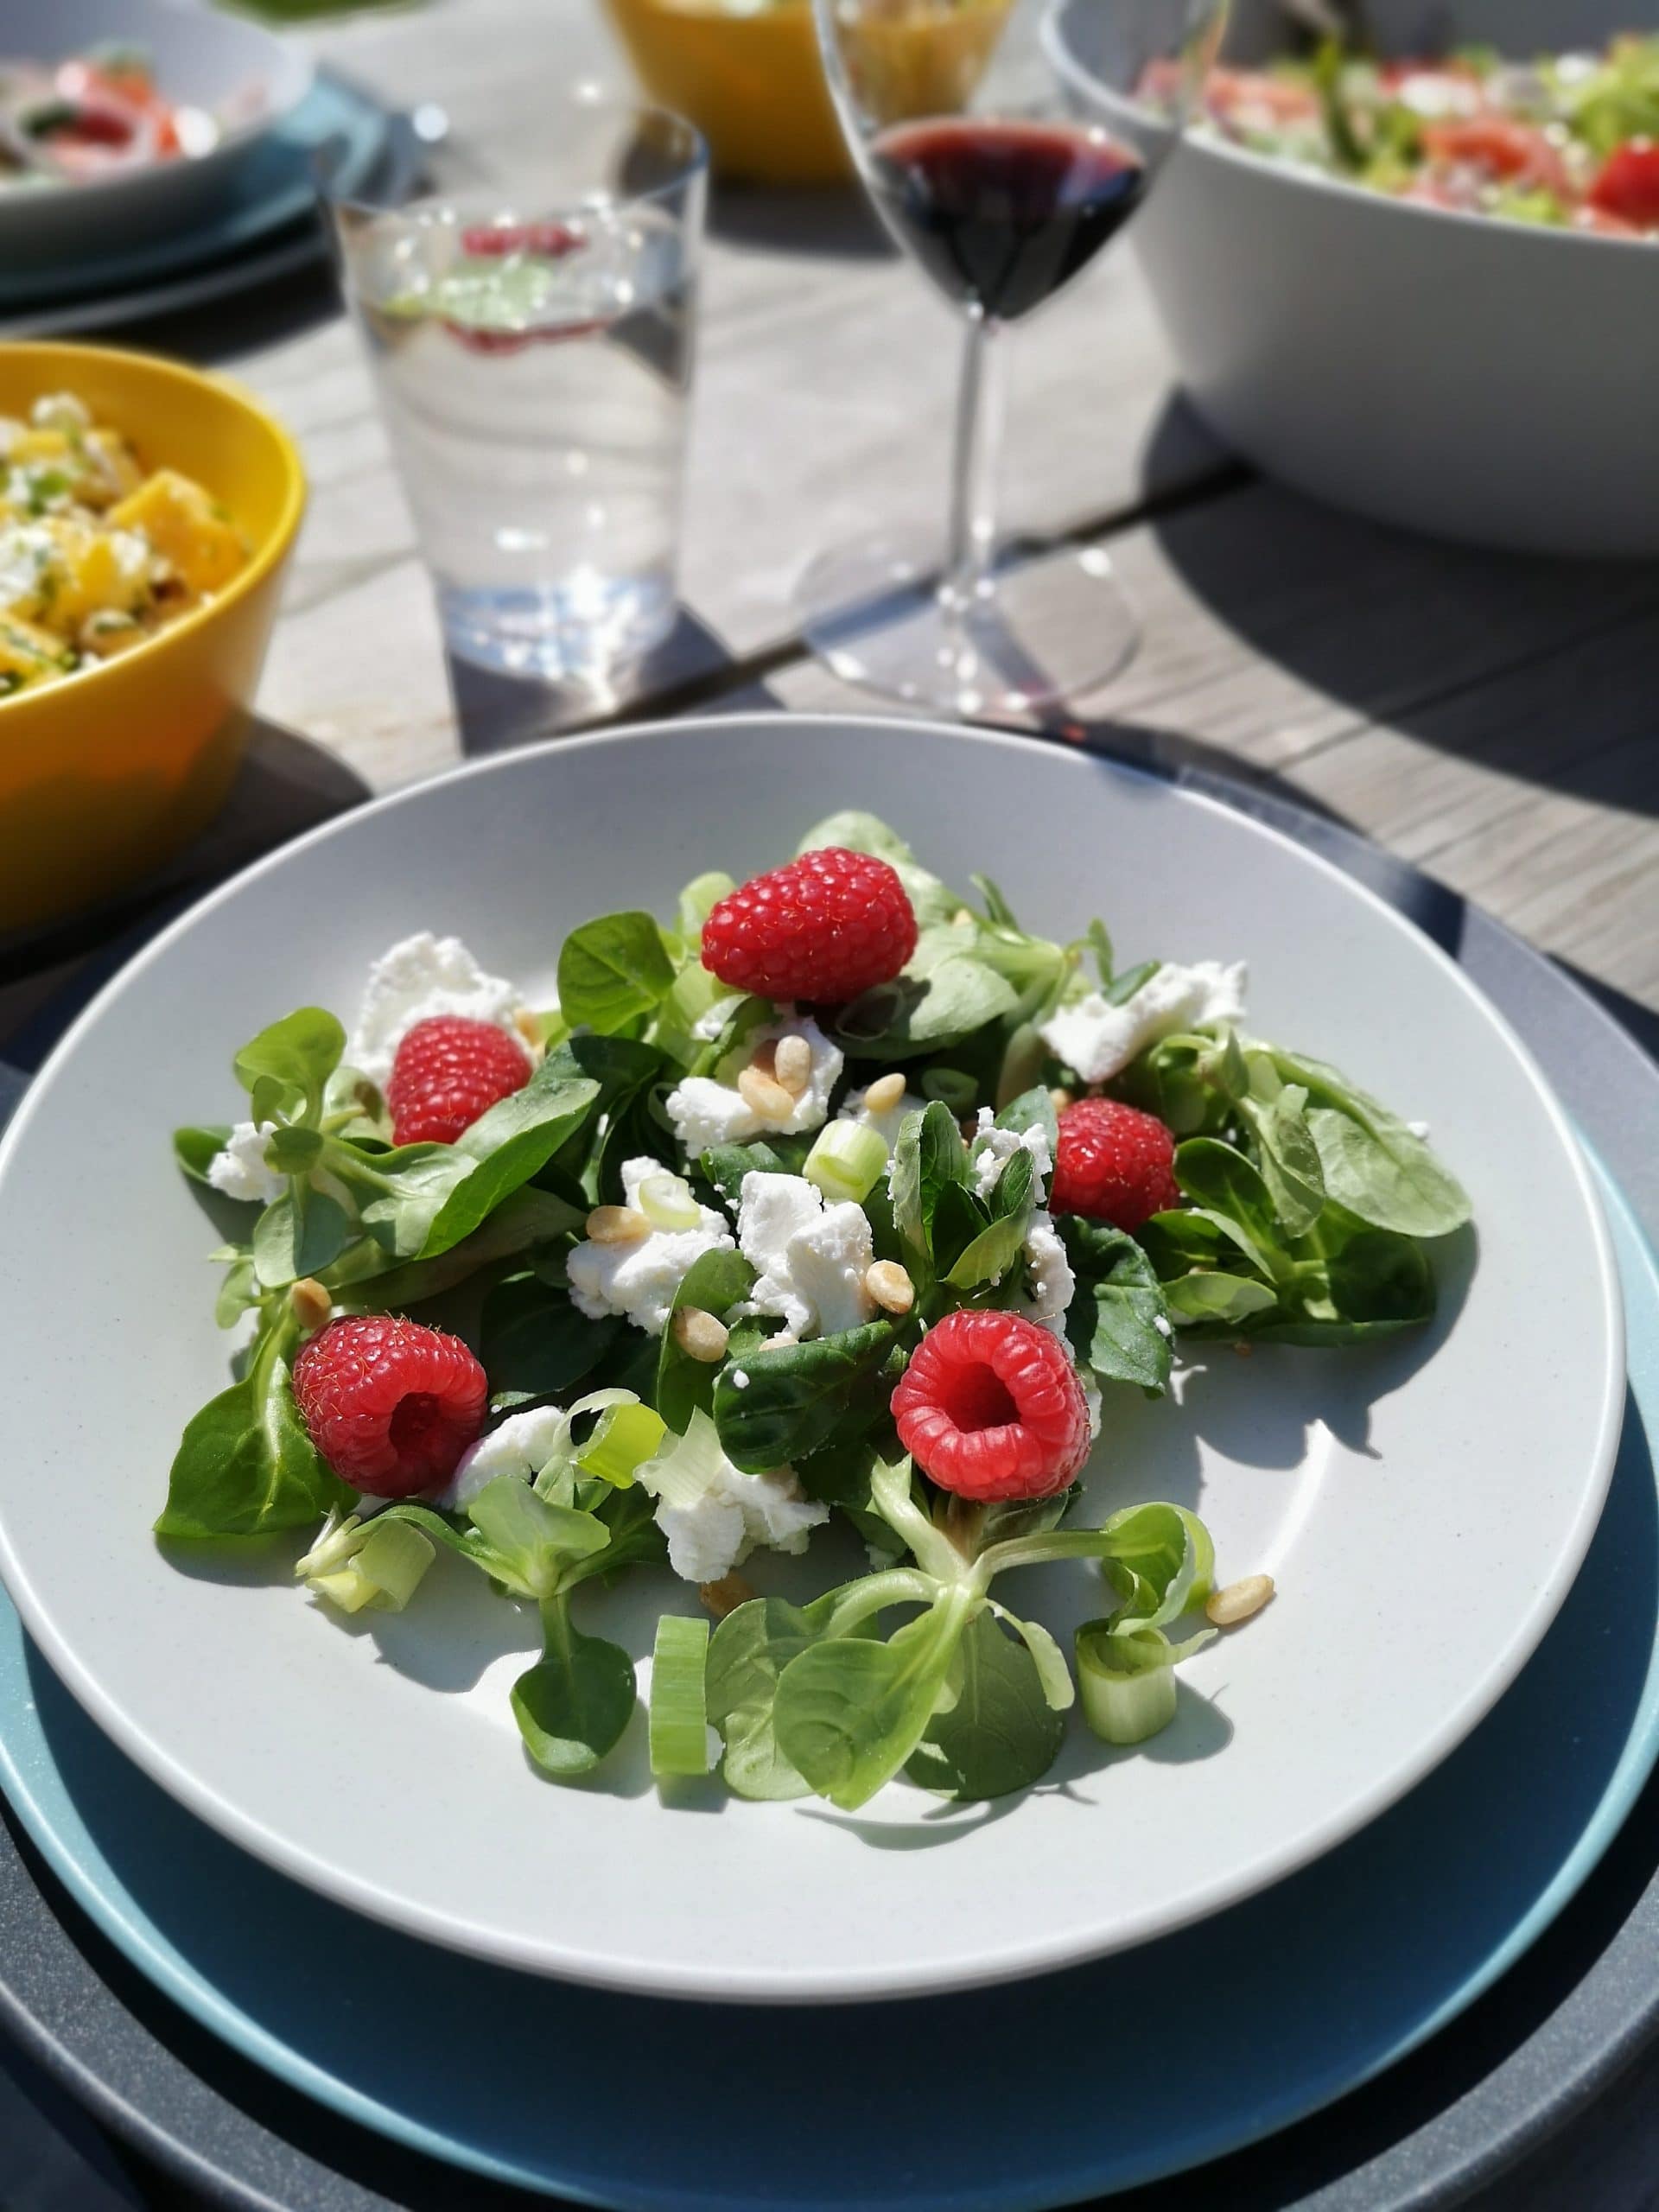 's zomerse salade met frambozen